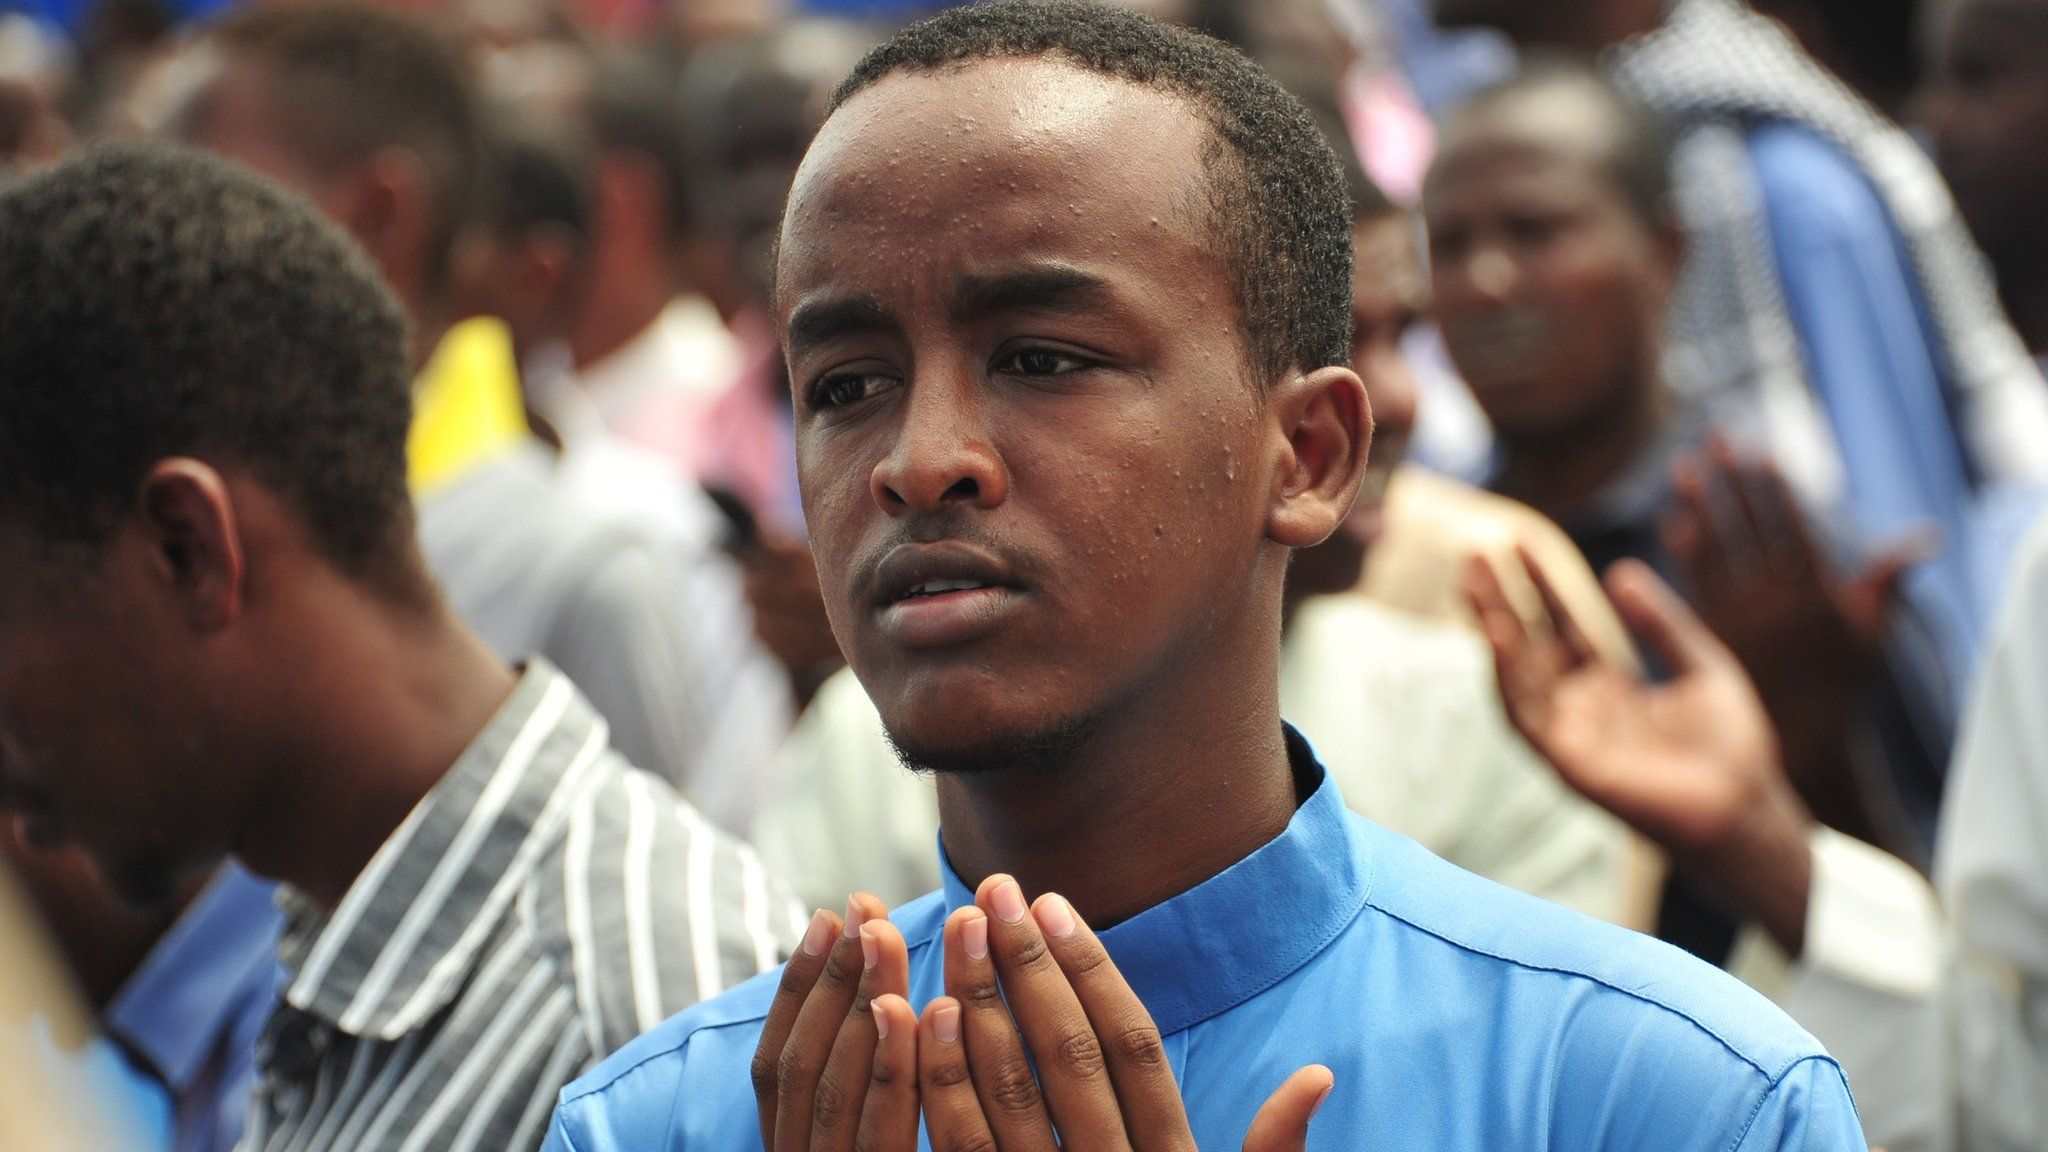 Somali man prays